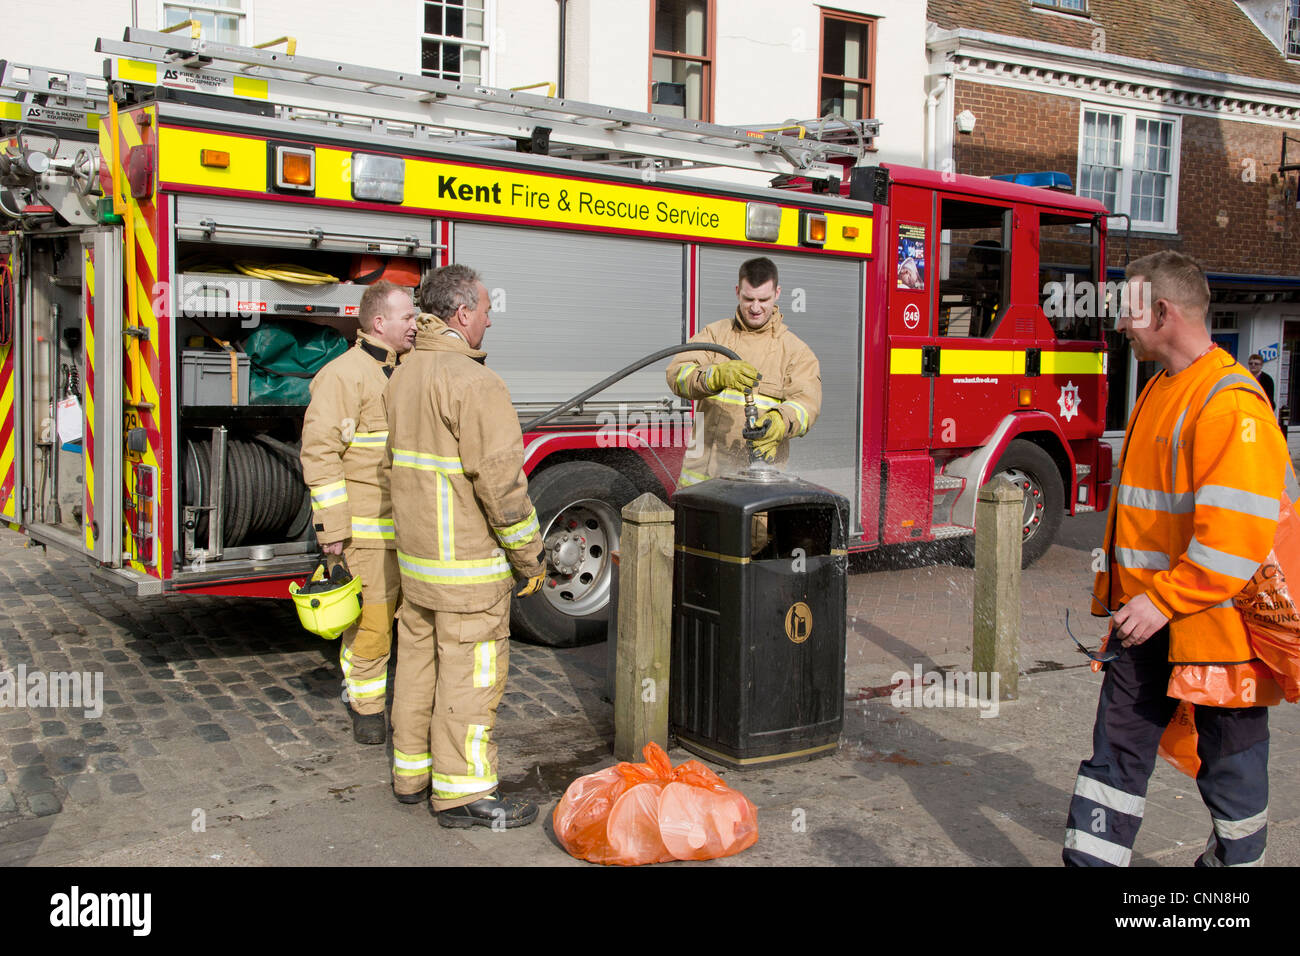 Fire Brigade on Call City Centre small fire in rubbish bin. Emergency Services Stock Photo